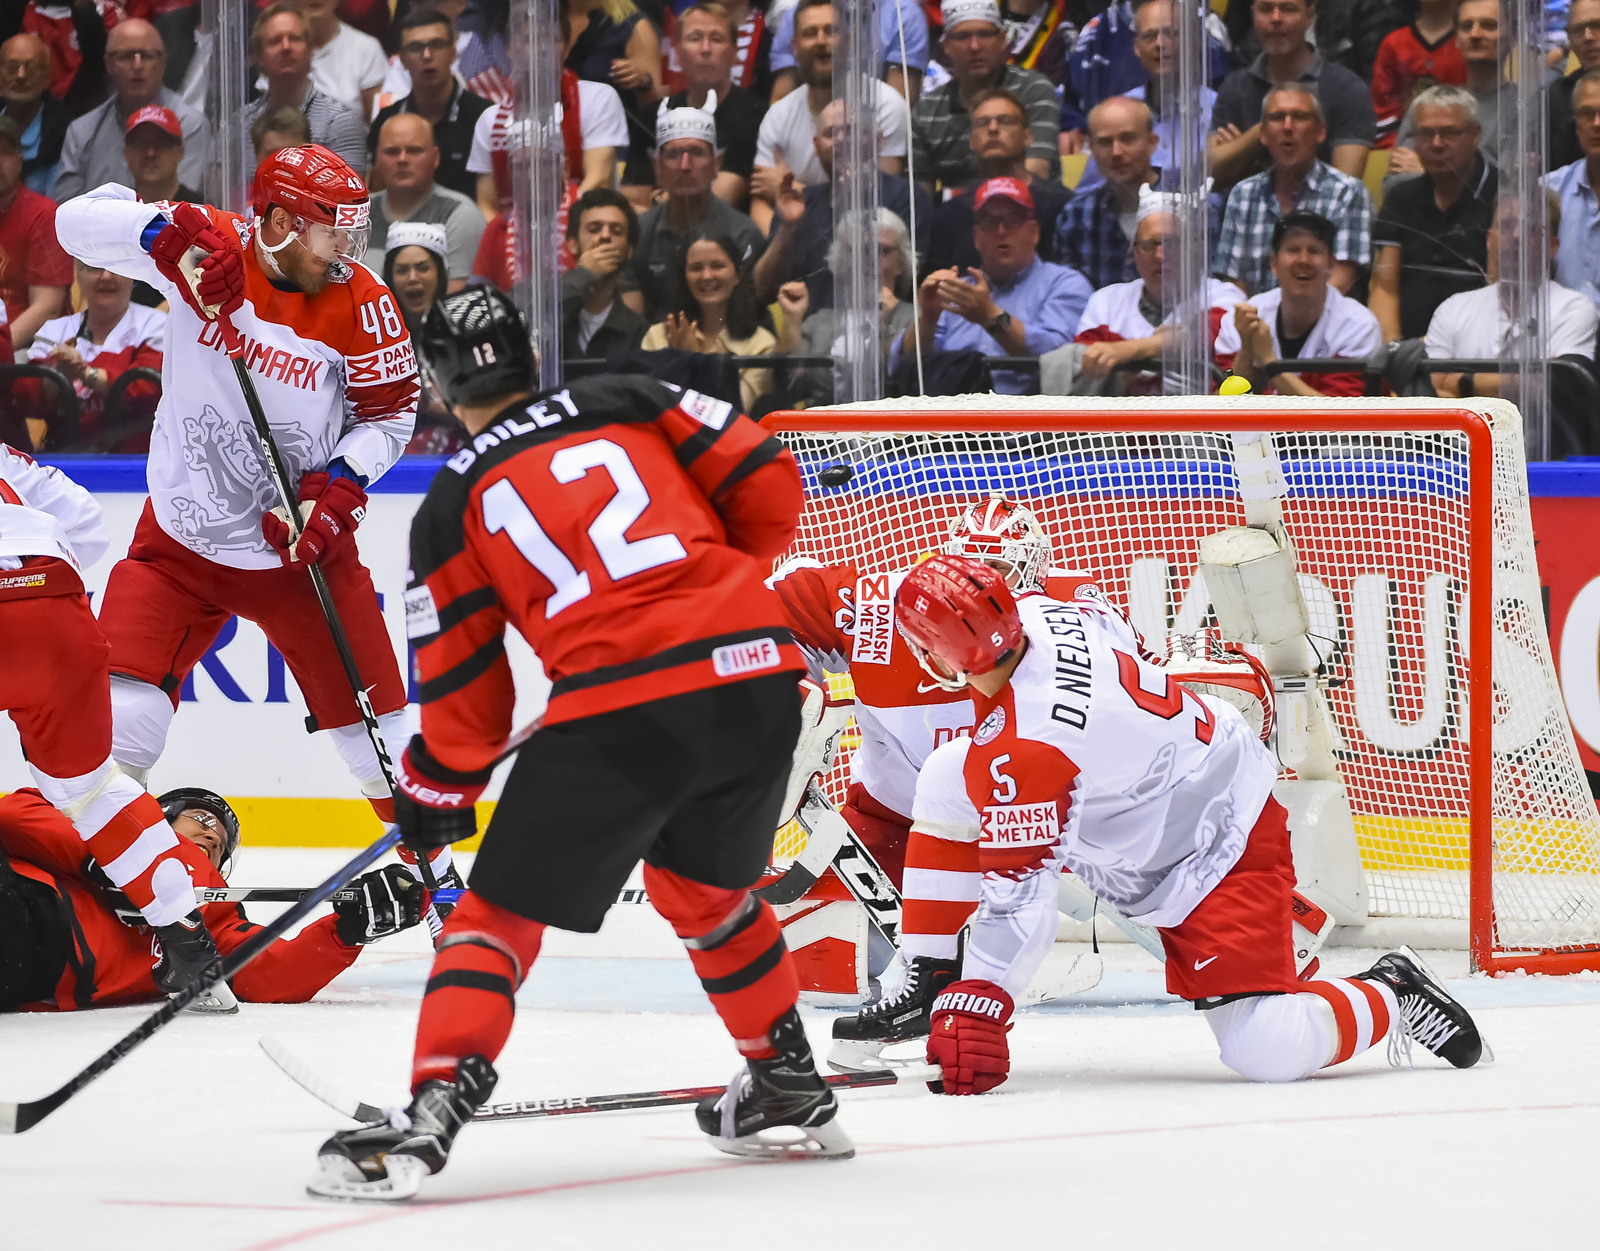 IIHF - Gallery: Canada vs. Denmark